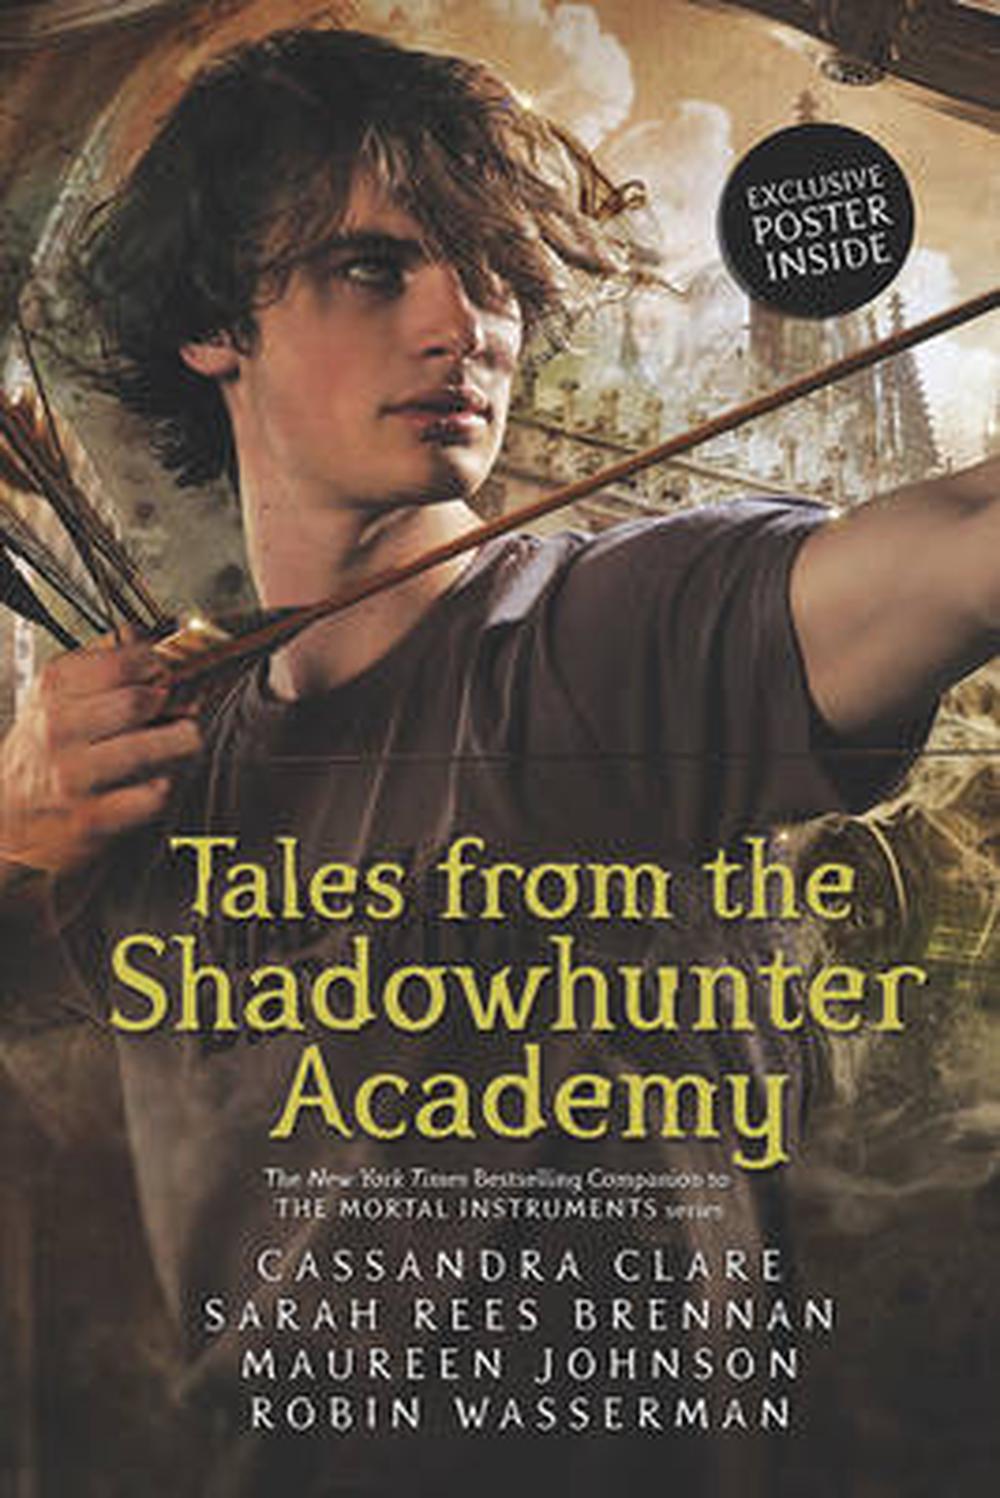 shadowhunter academy book 4